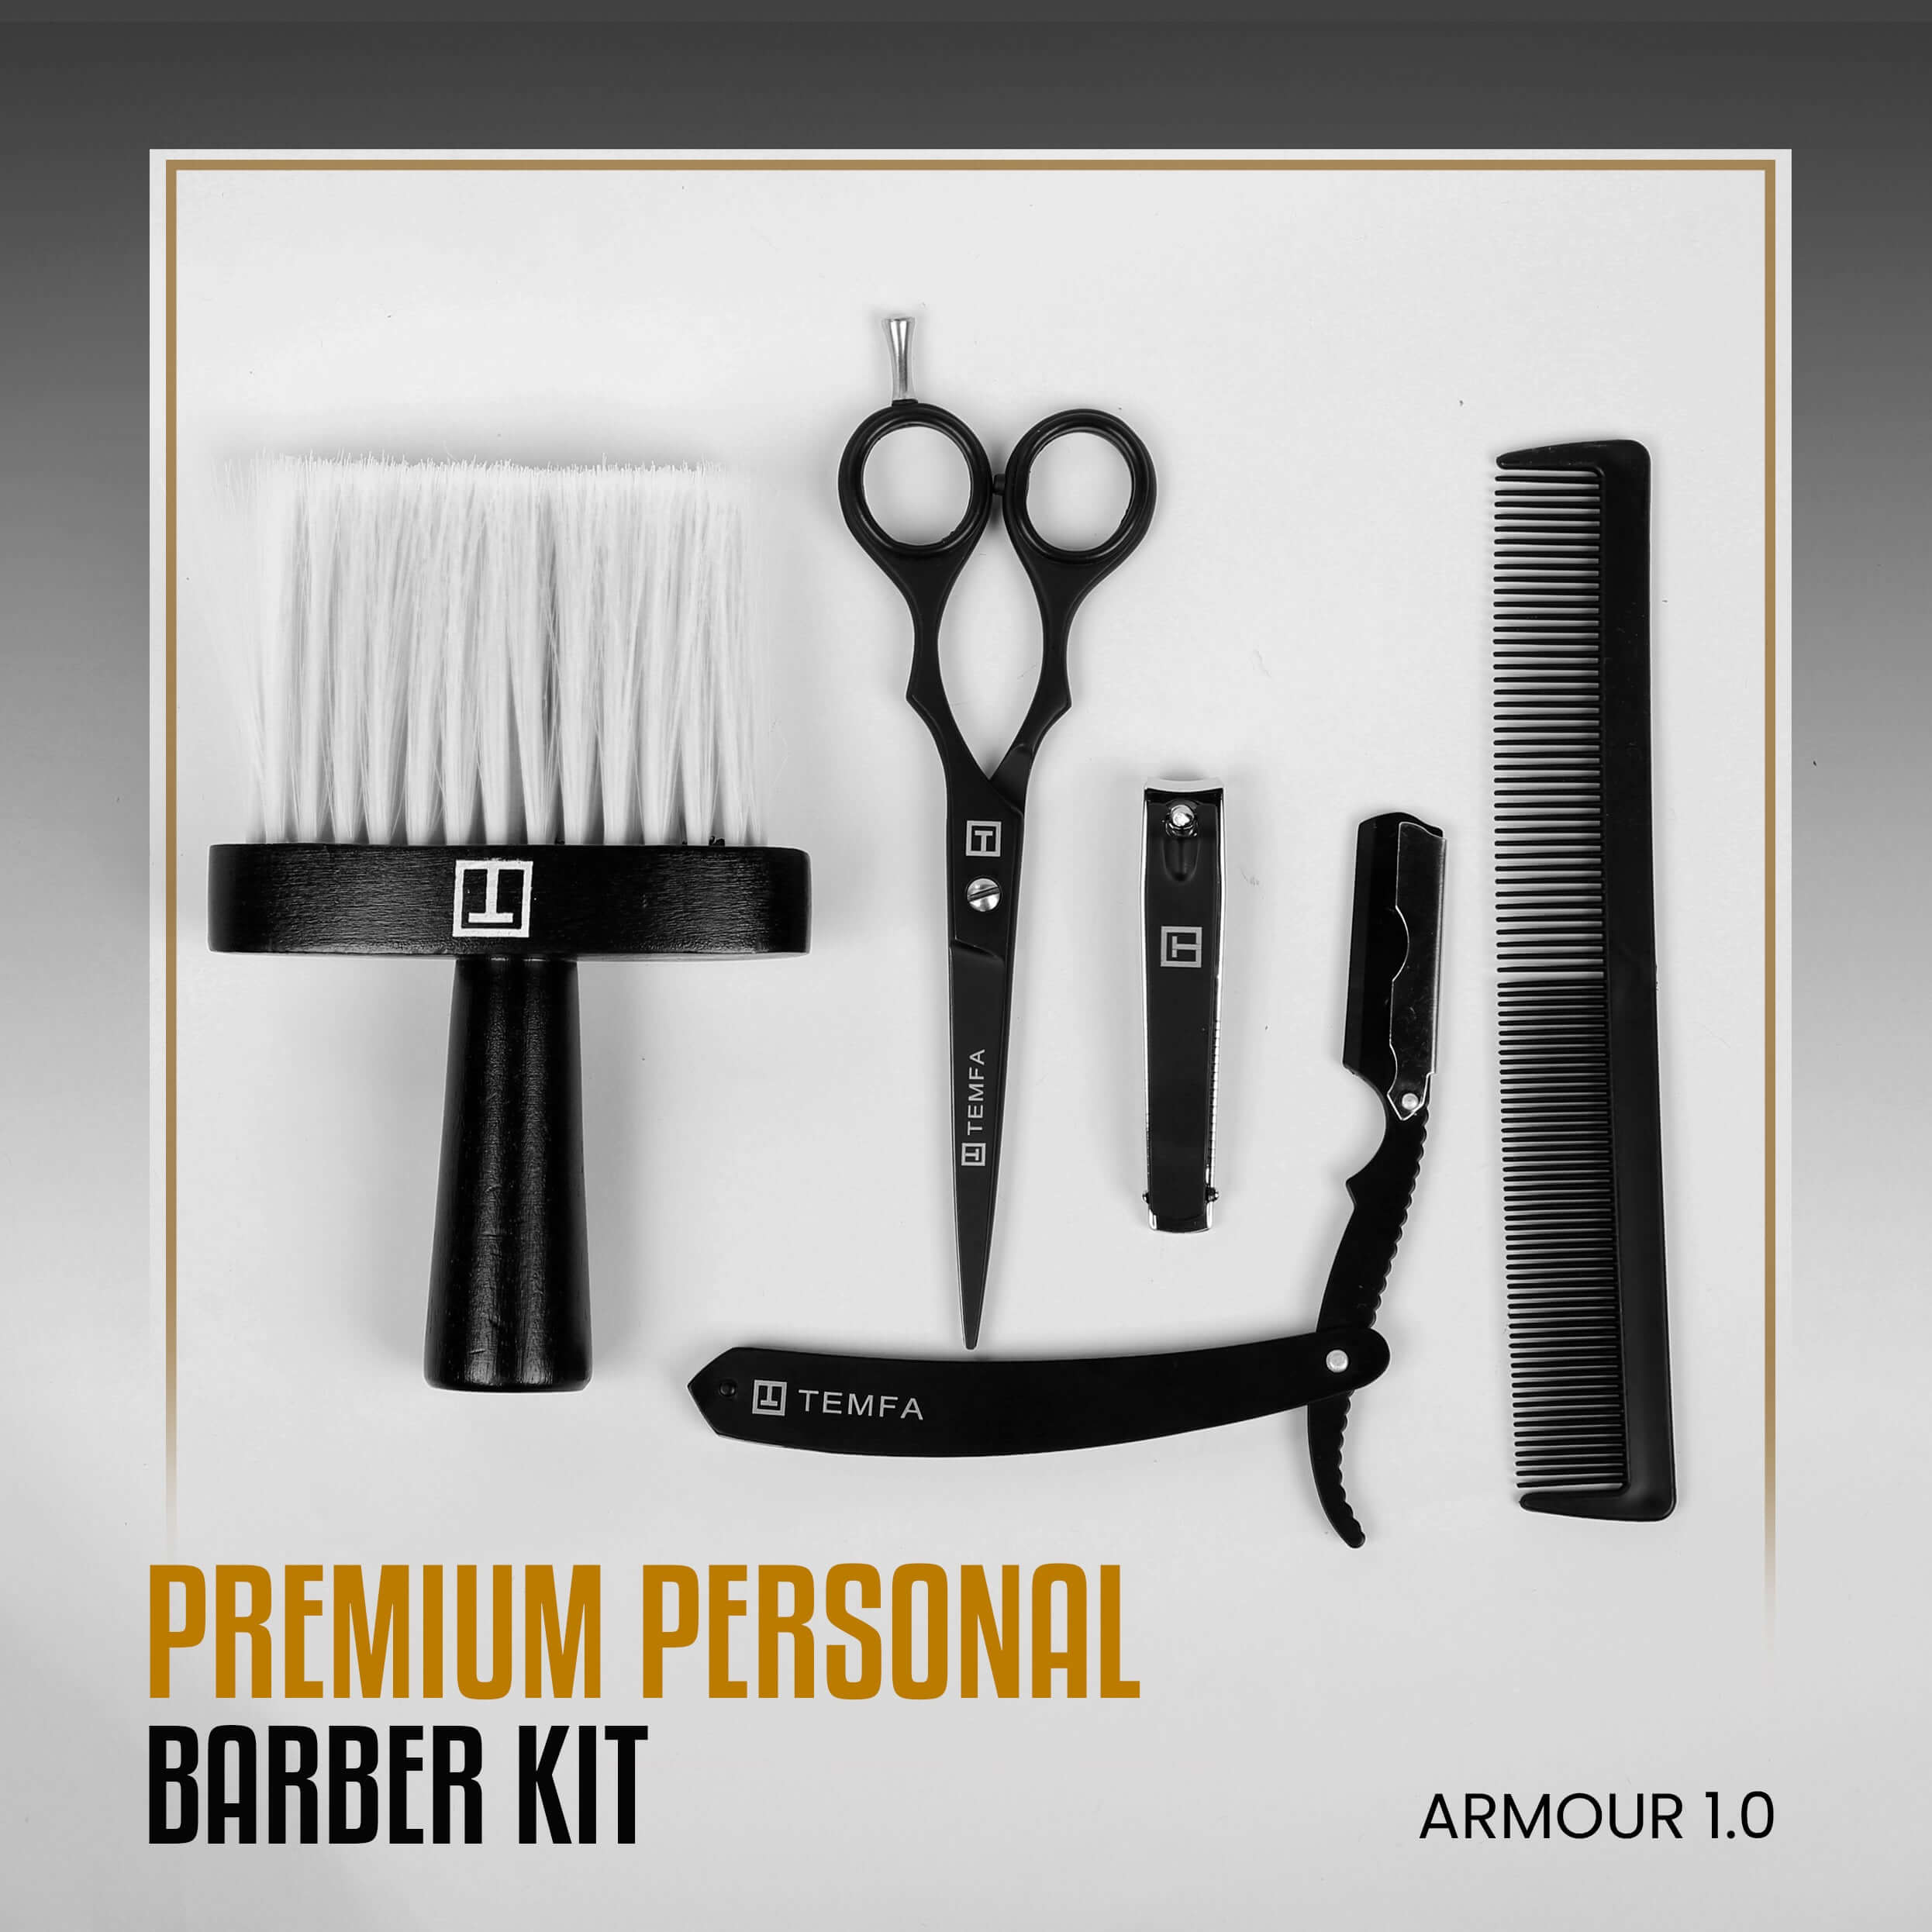 Premium Personal Grooming Brand